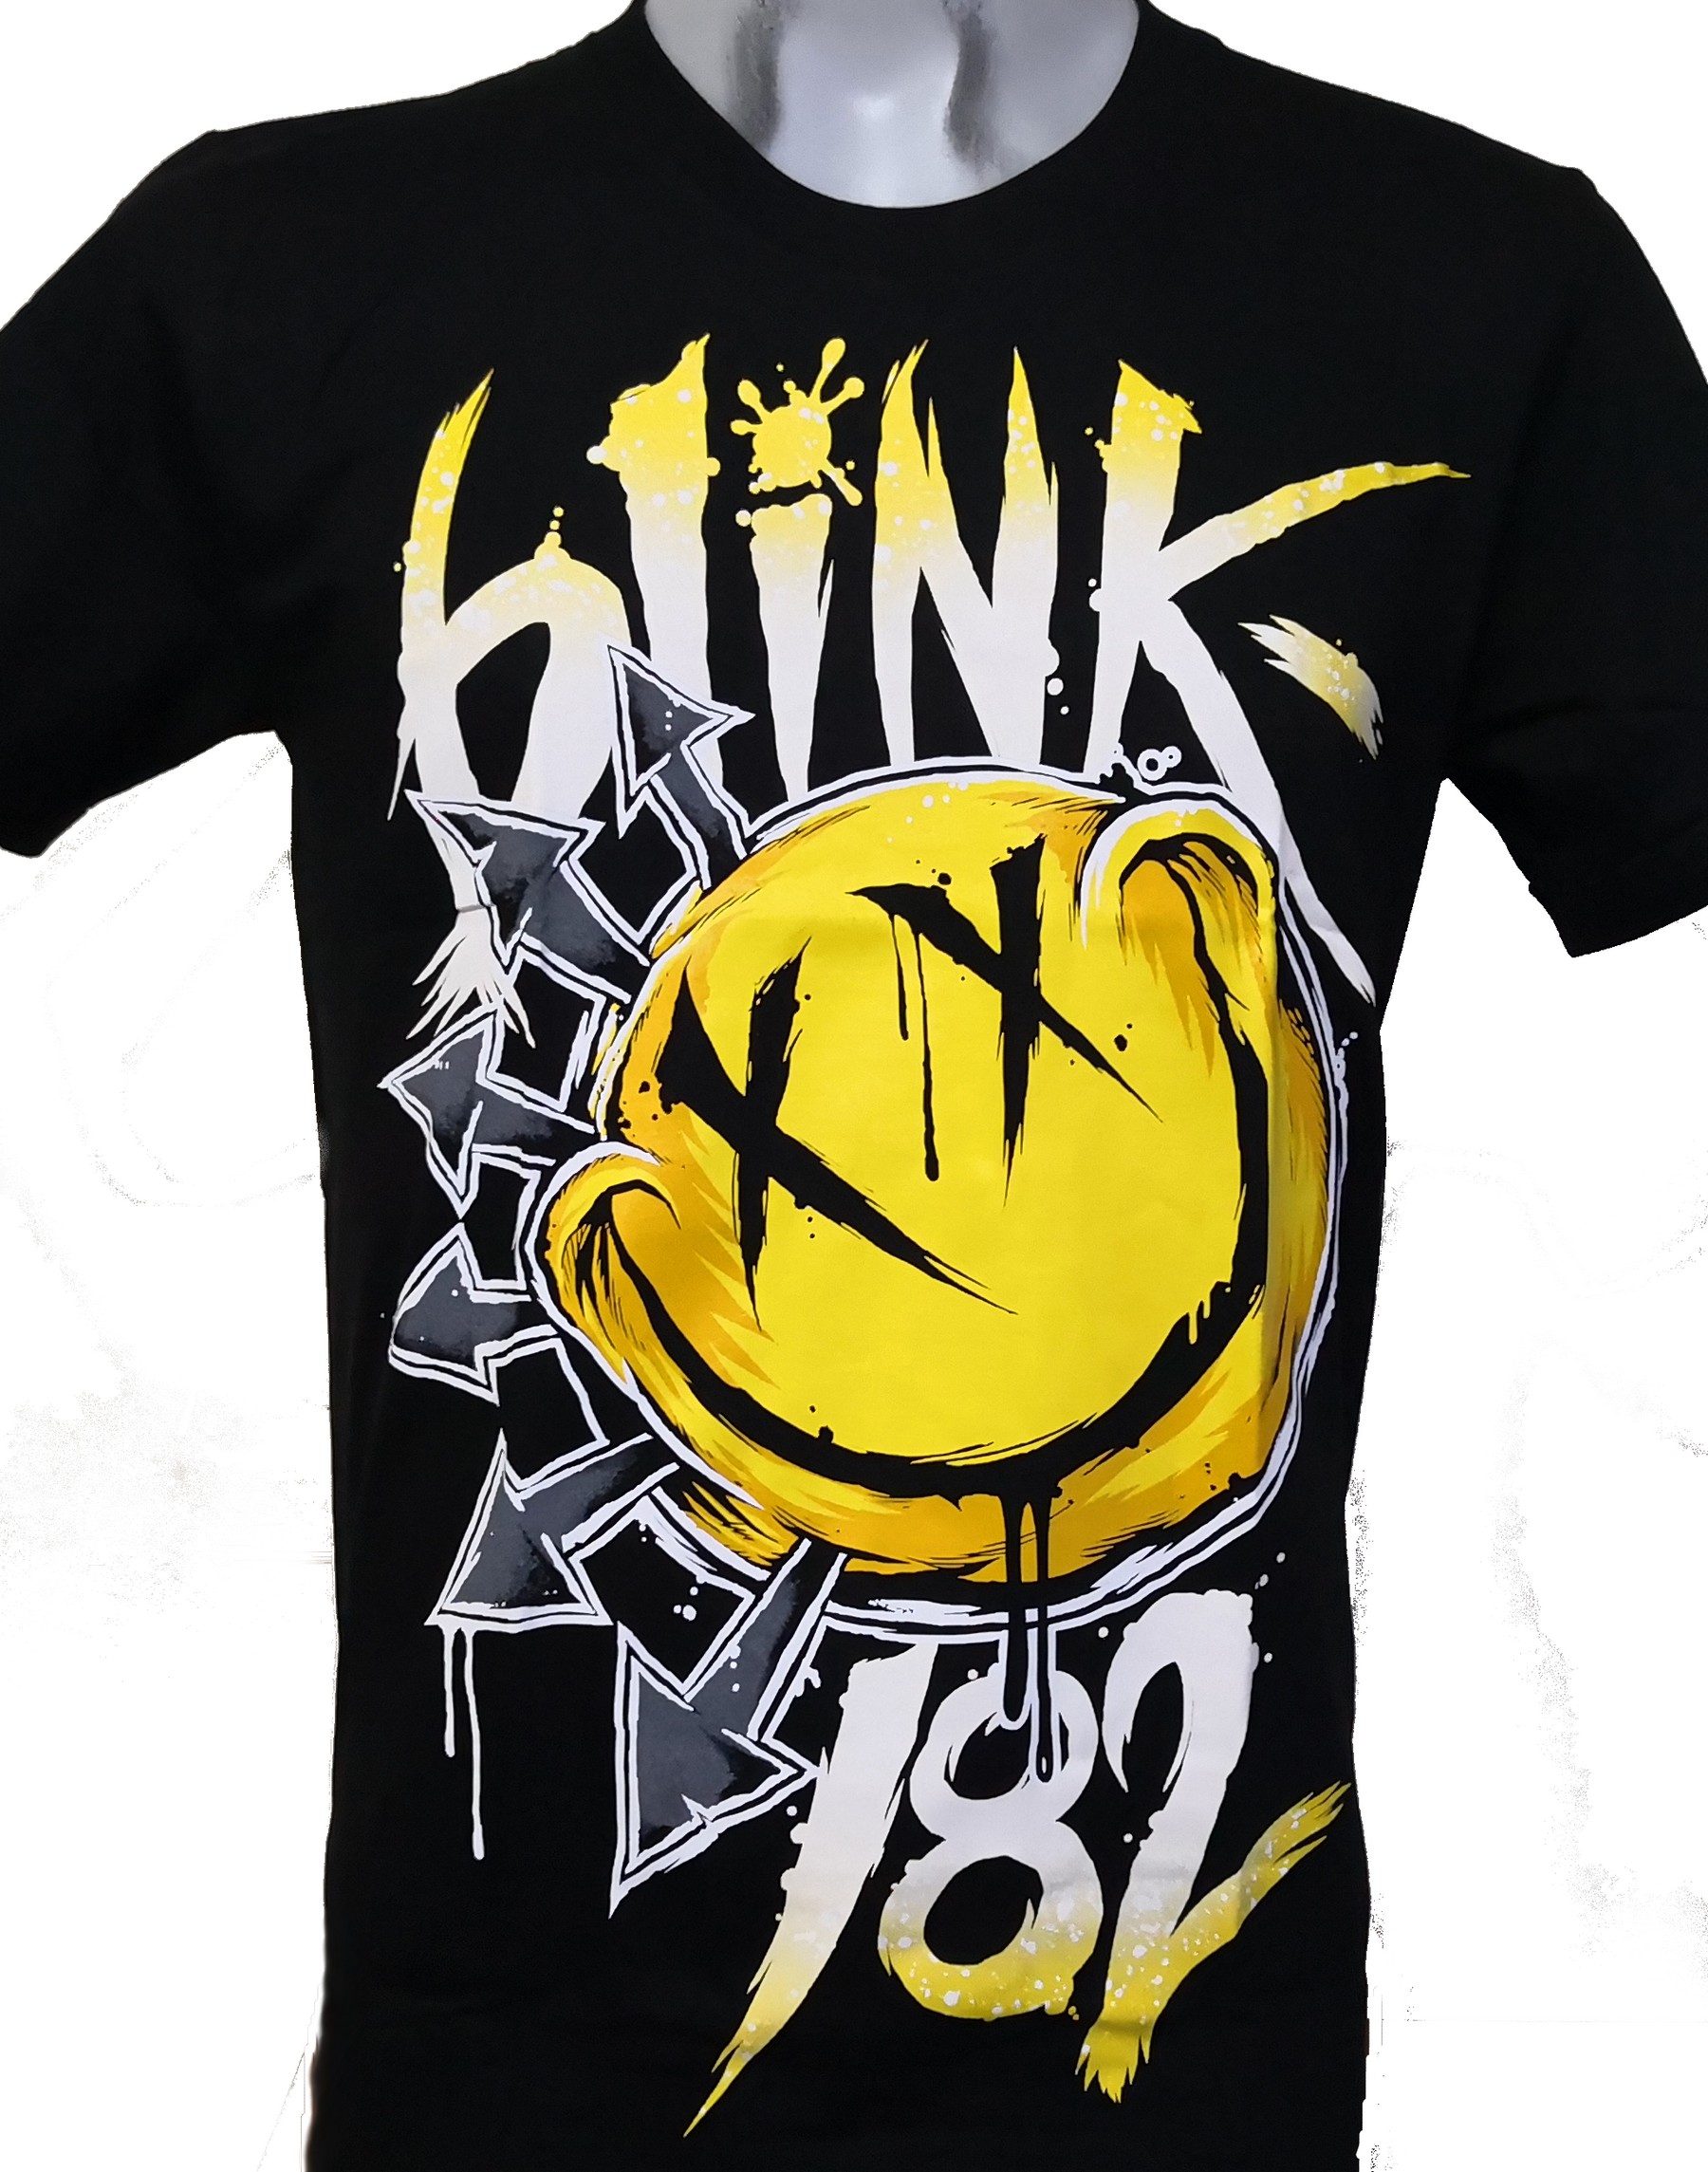 Blink-182 t-shirt size M – RoxxBKK